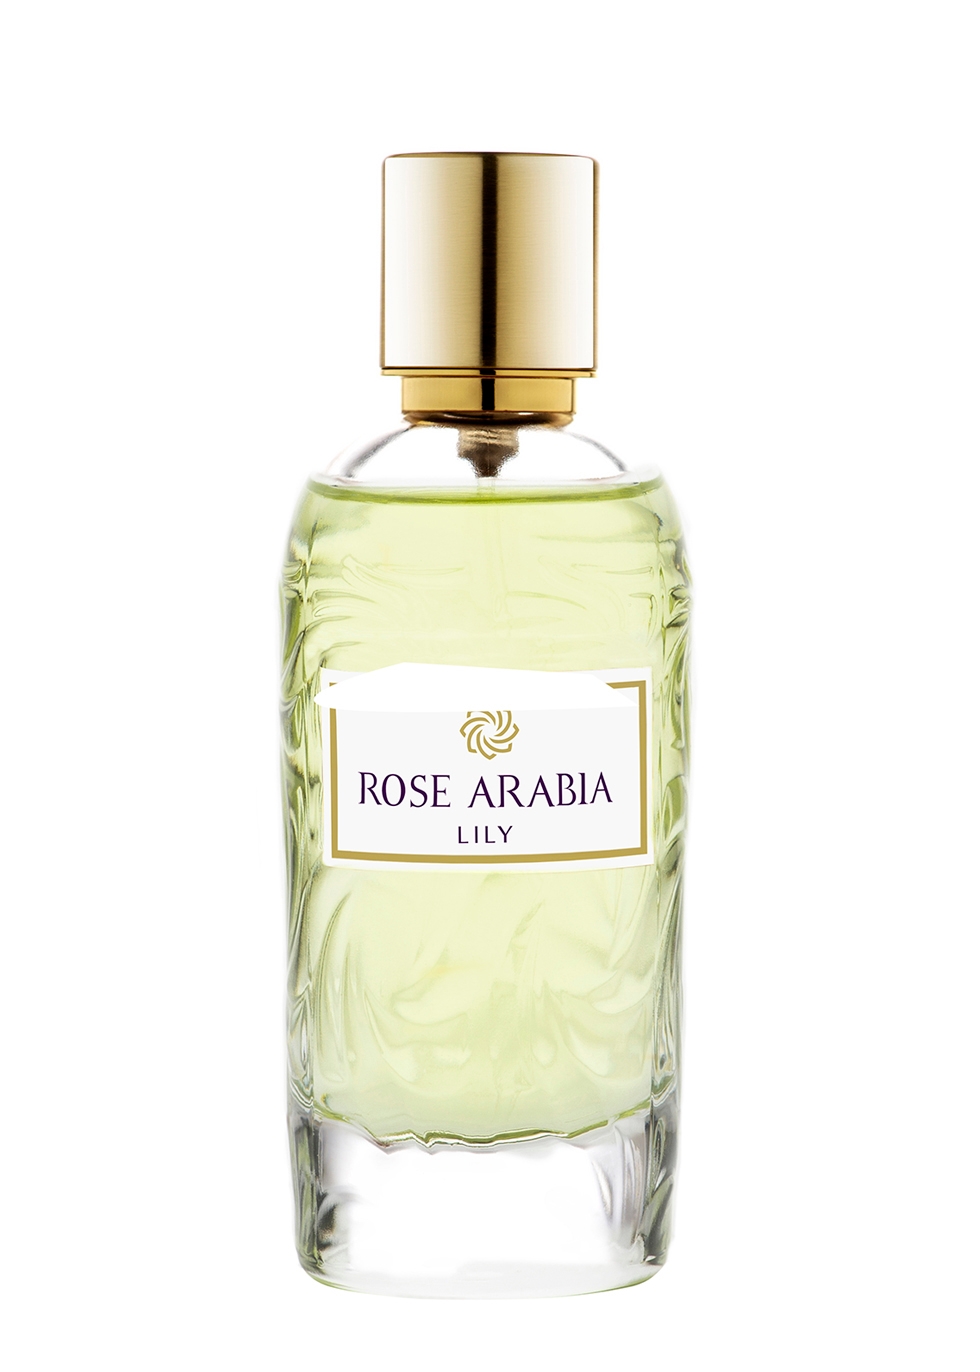 rose de arabia perfume